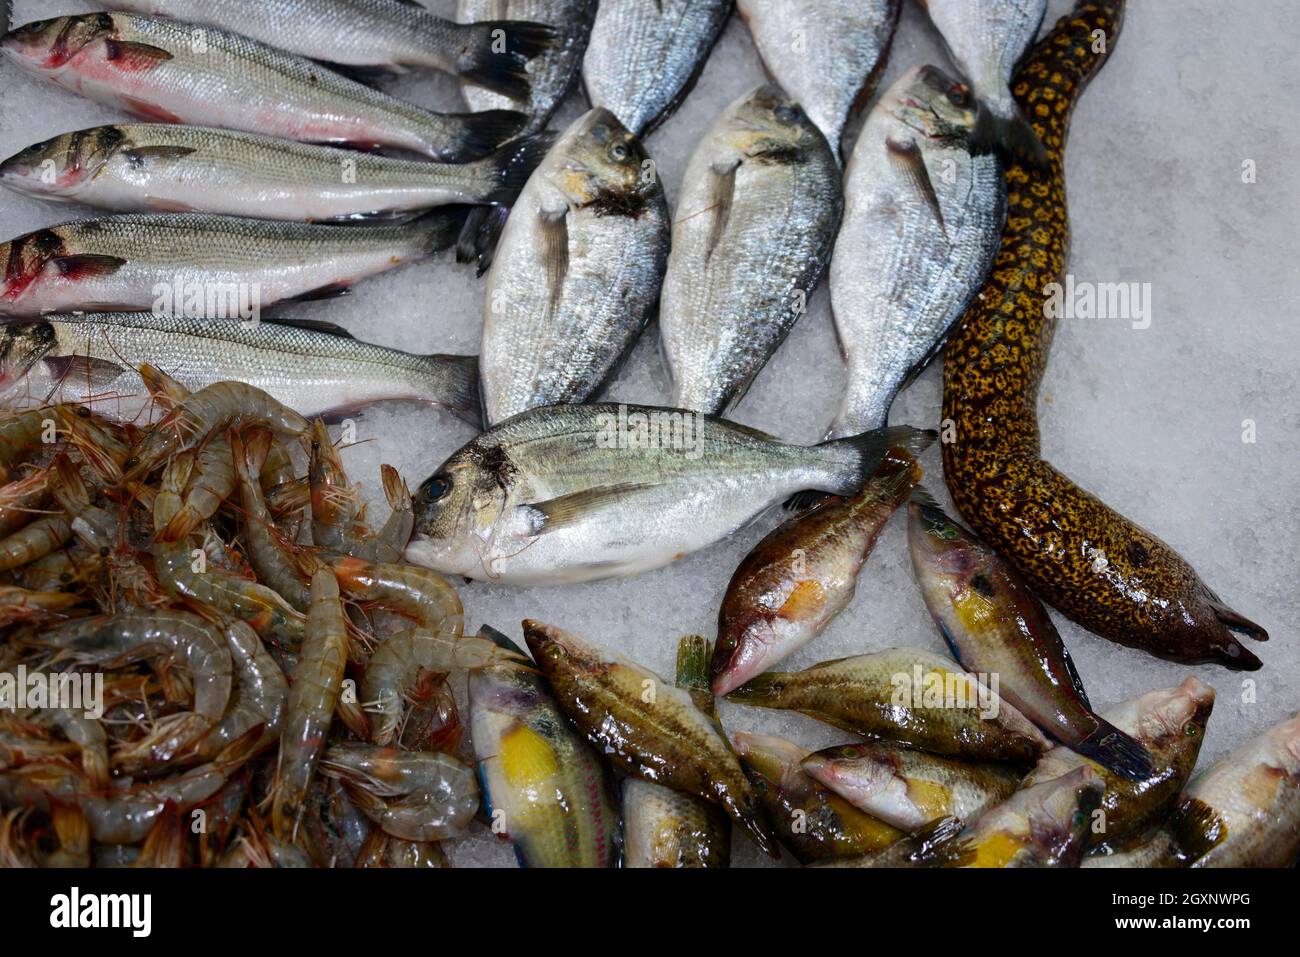 Fish, farmers' market, Zelena Pijaca, Ulcinj, Ulqini, Montenegro Stock Photo